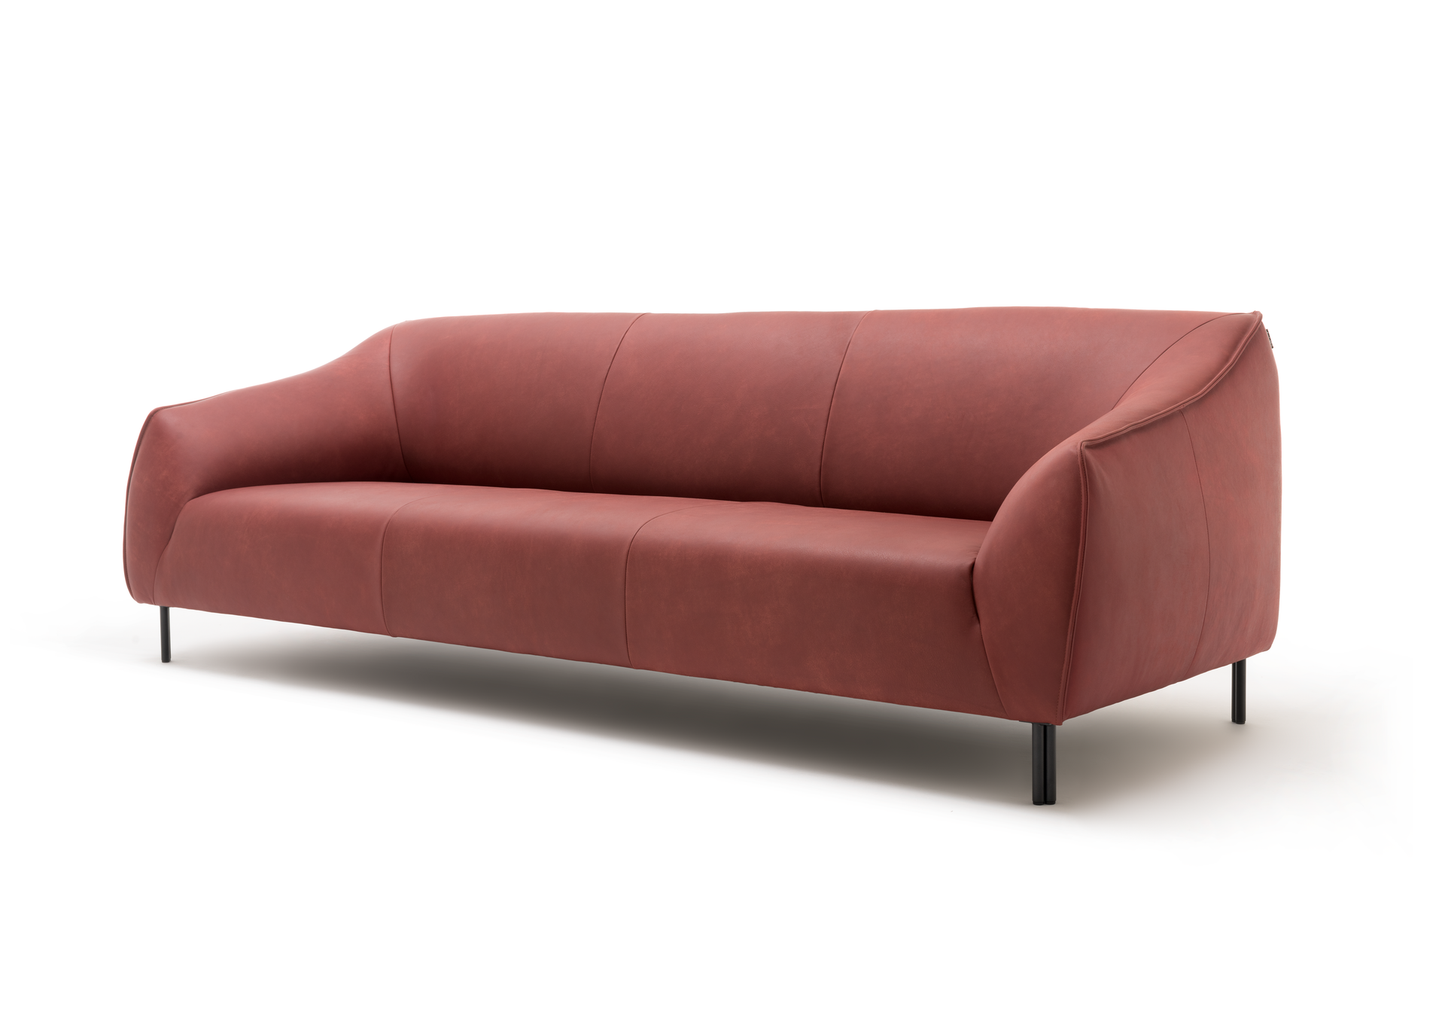 Freistil Rolf Benz 132 sofa red leather